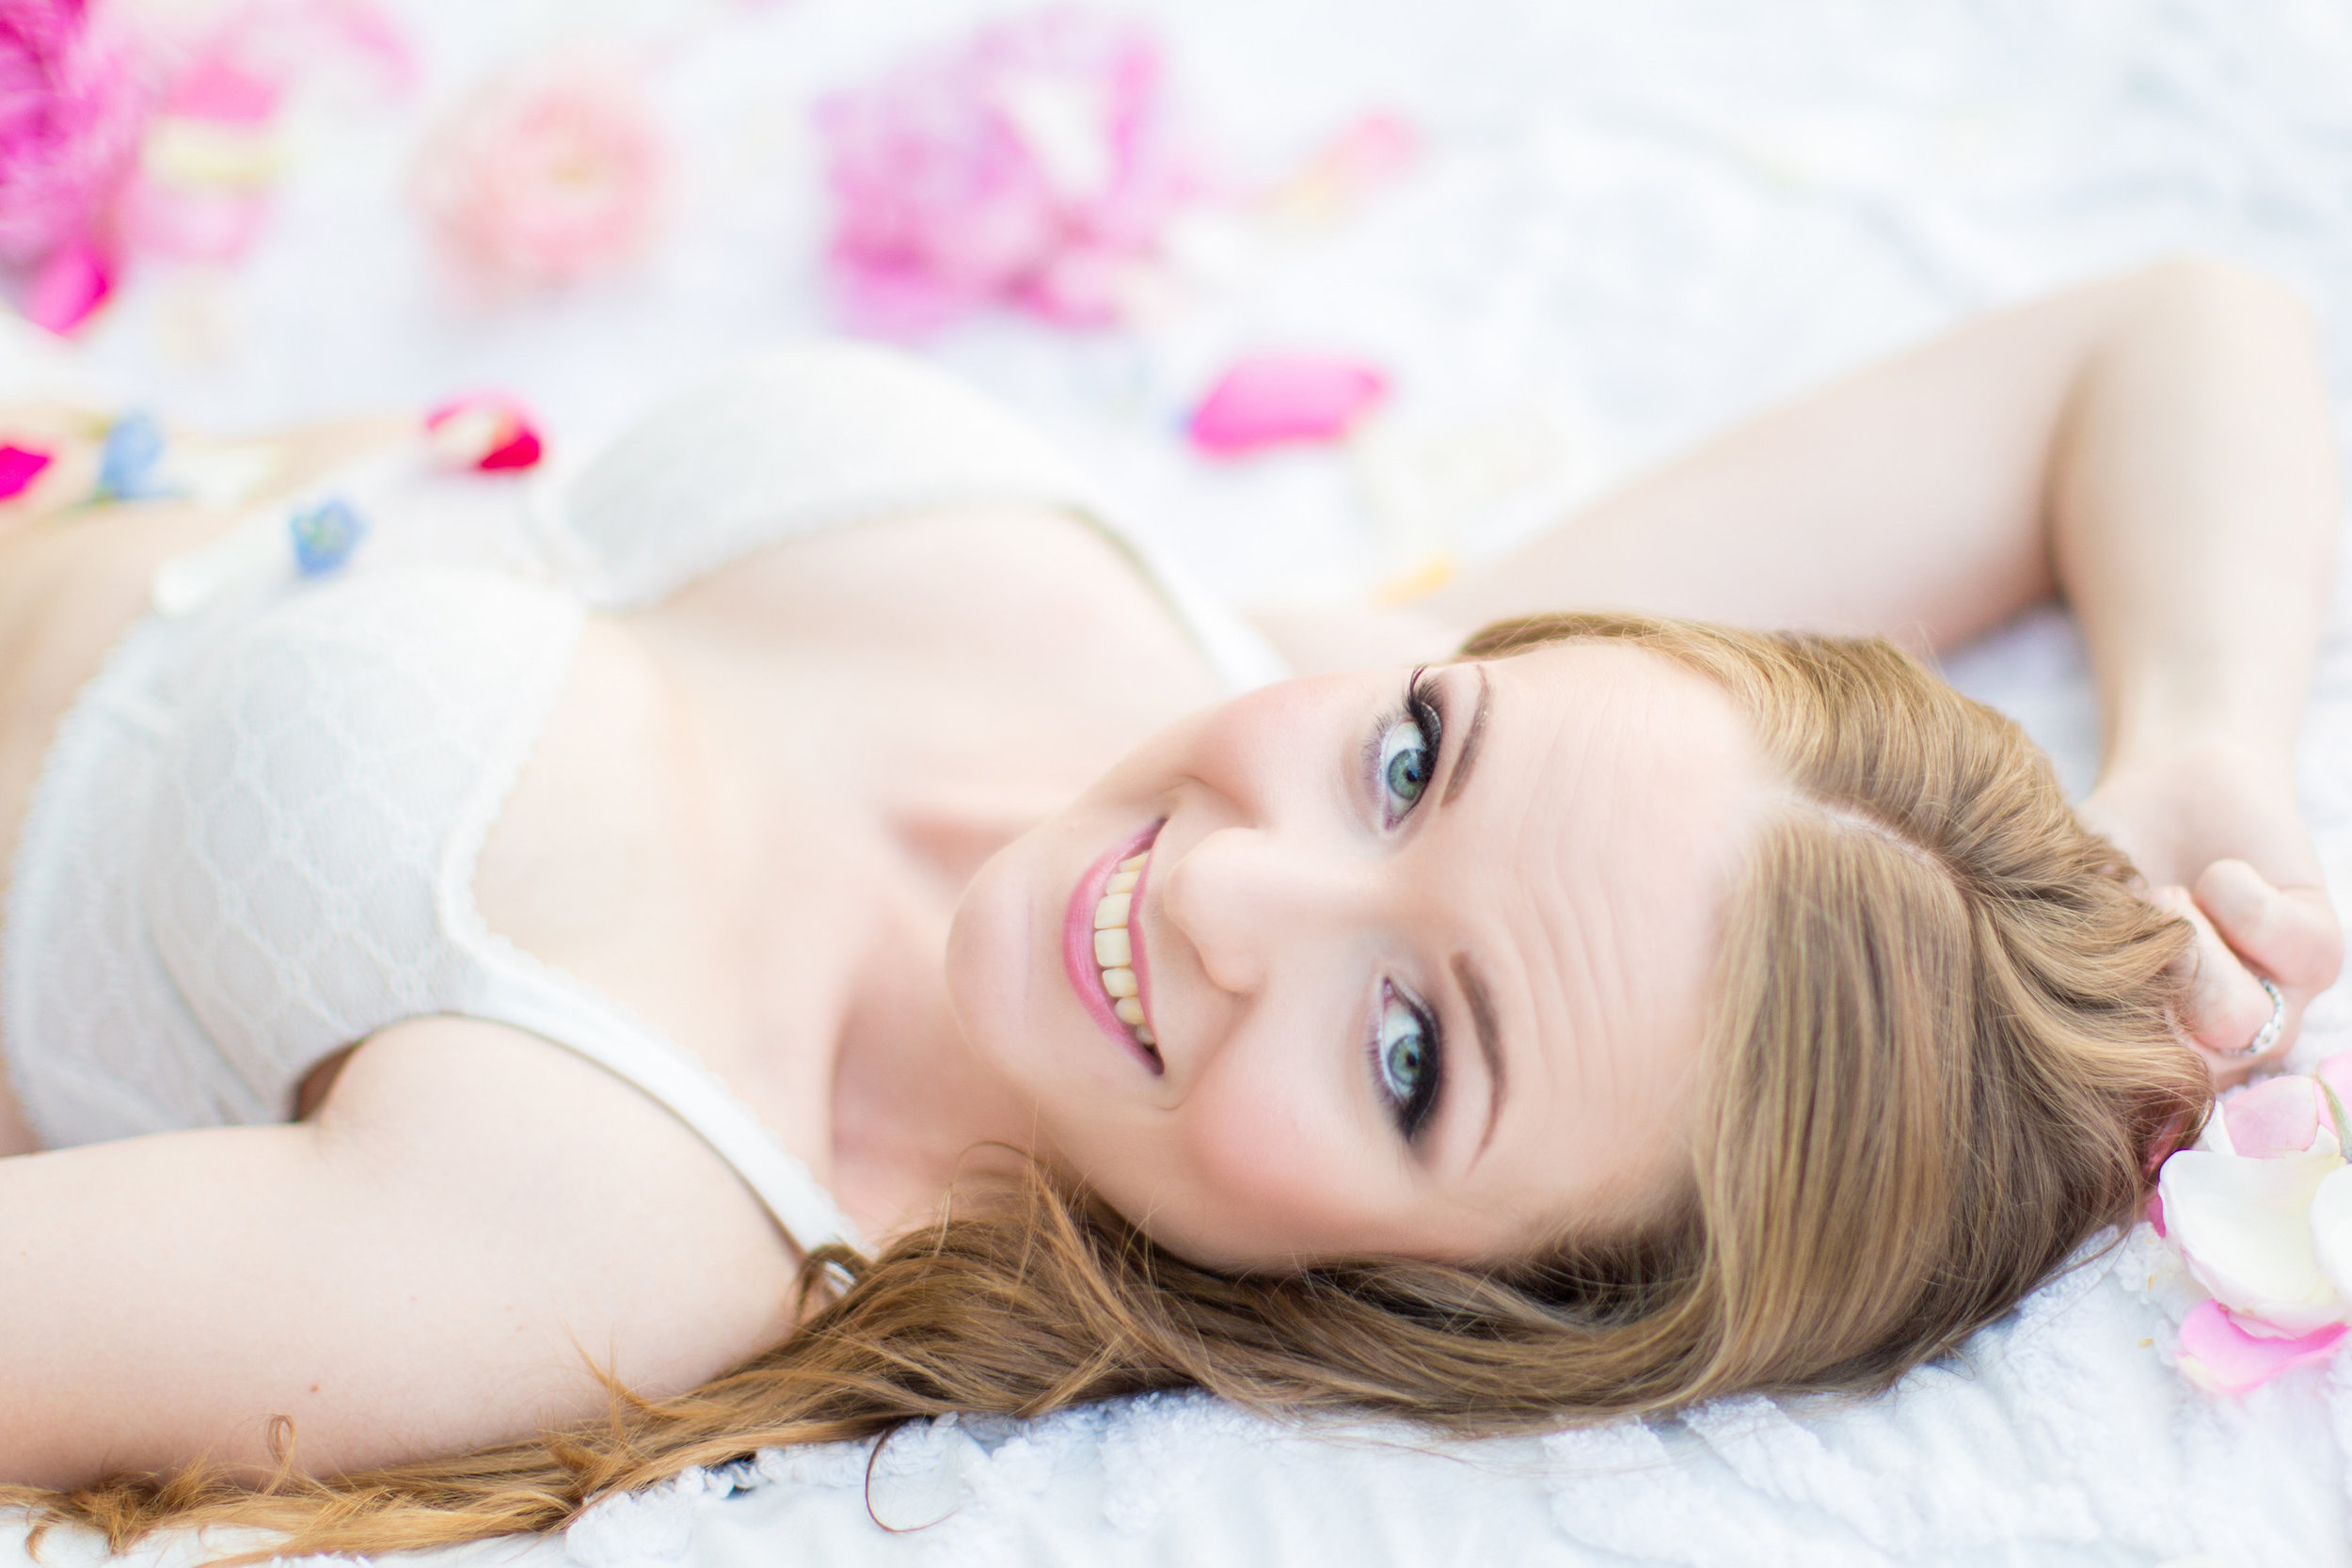 Ally-Blush-Floral-Bridal-Intimate-Portraiture-Boudoir-0020.jpg